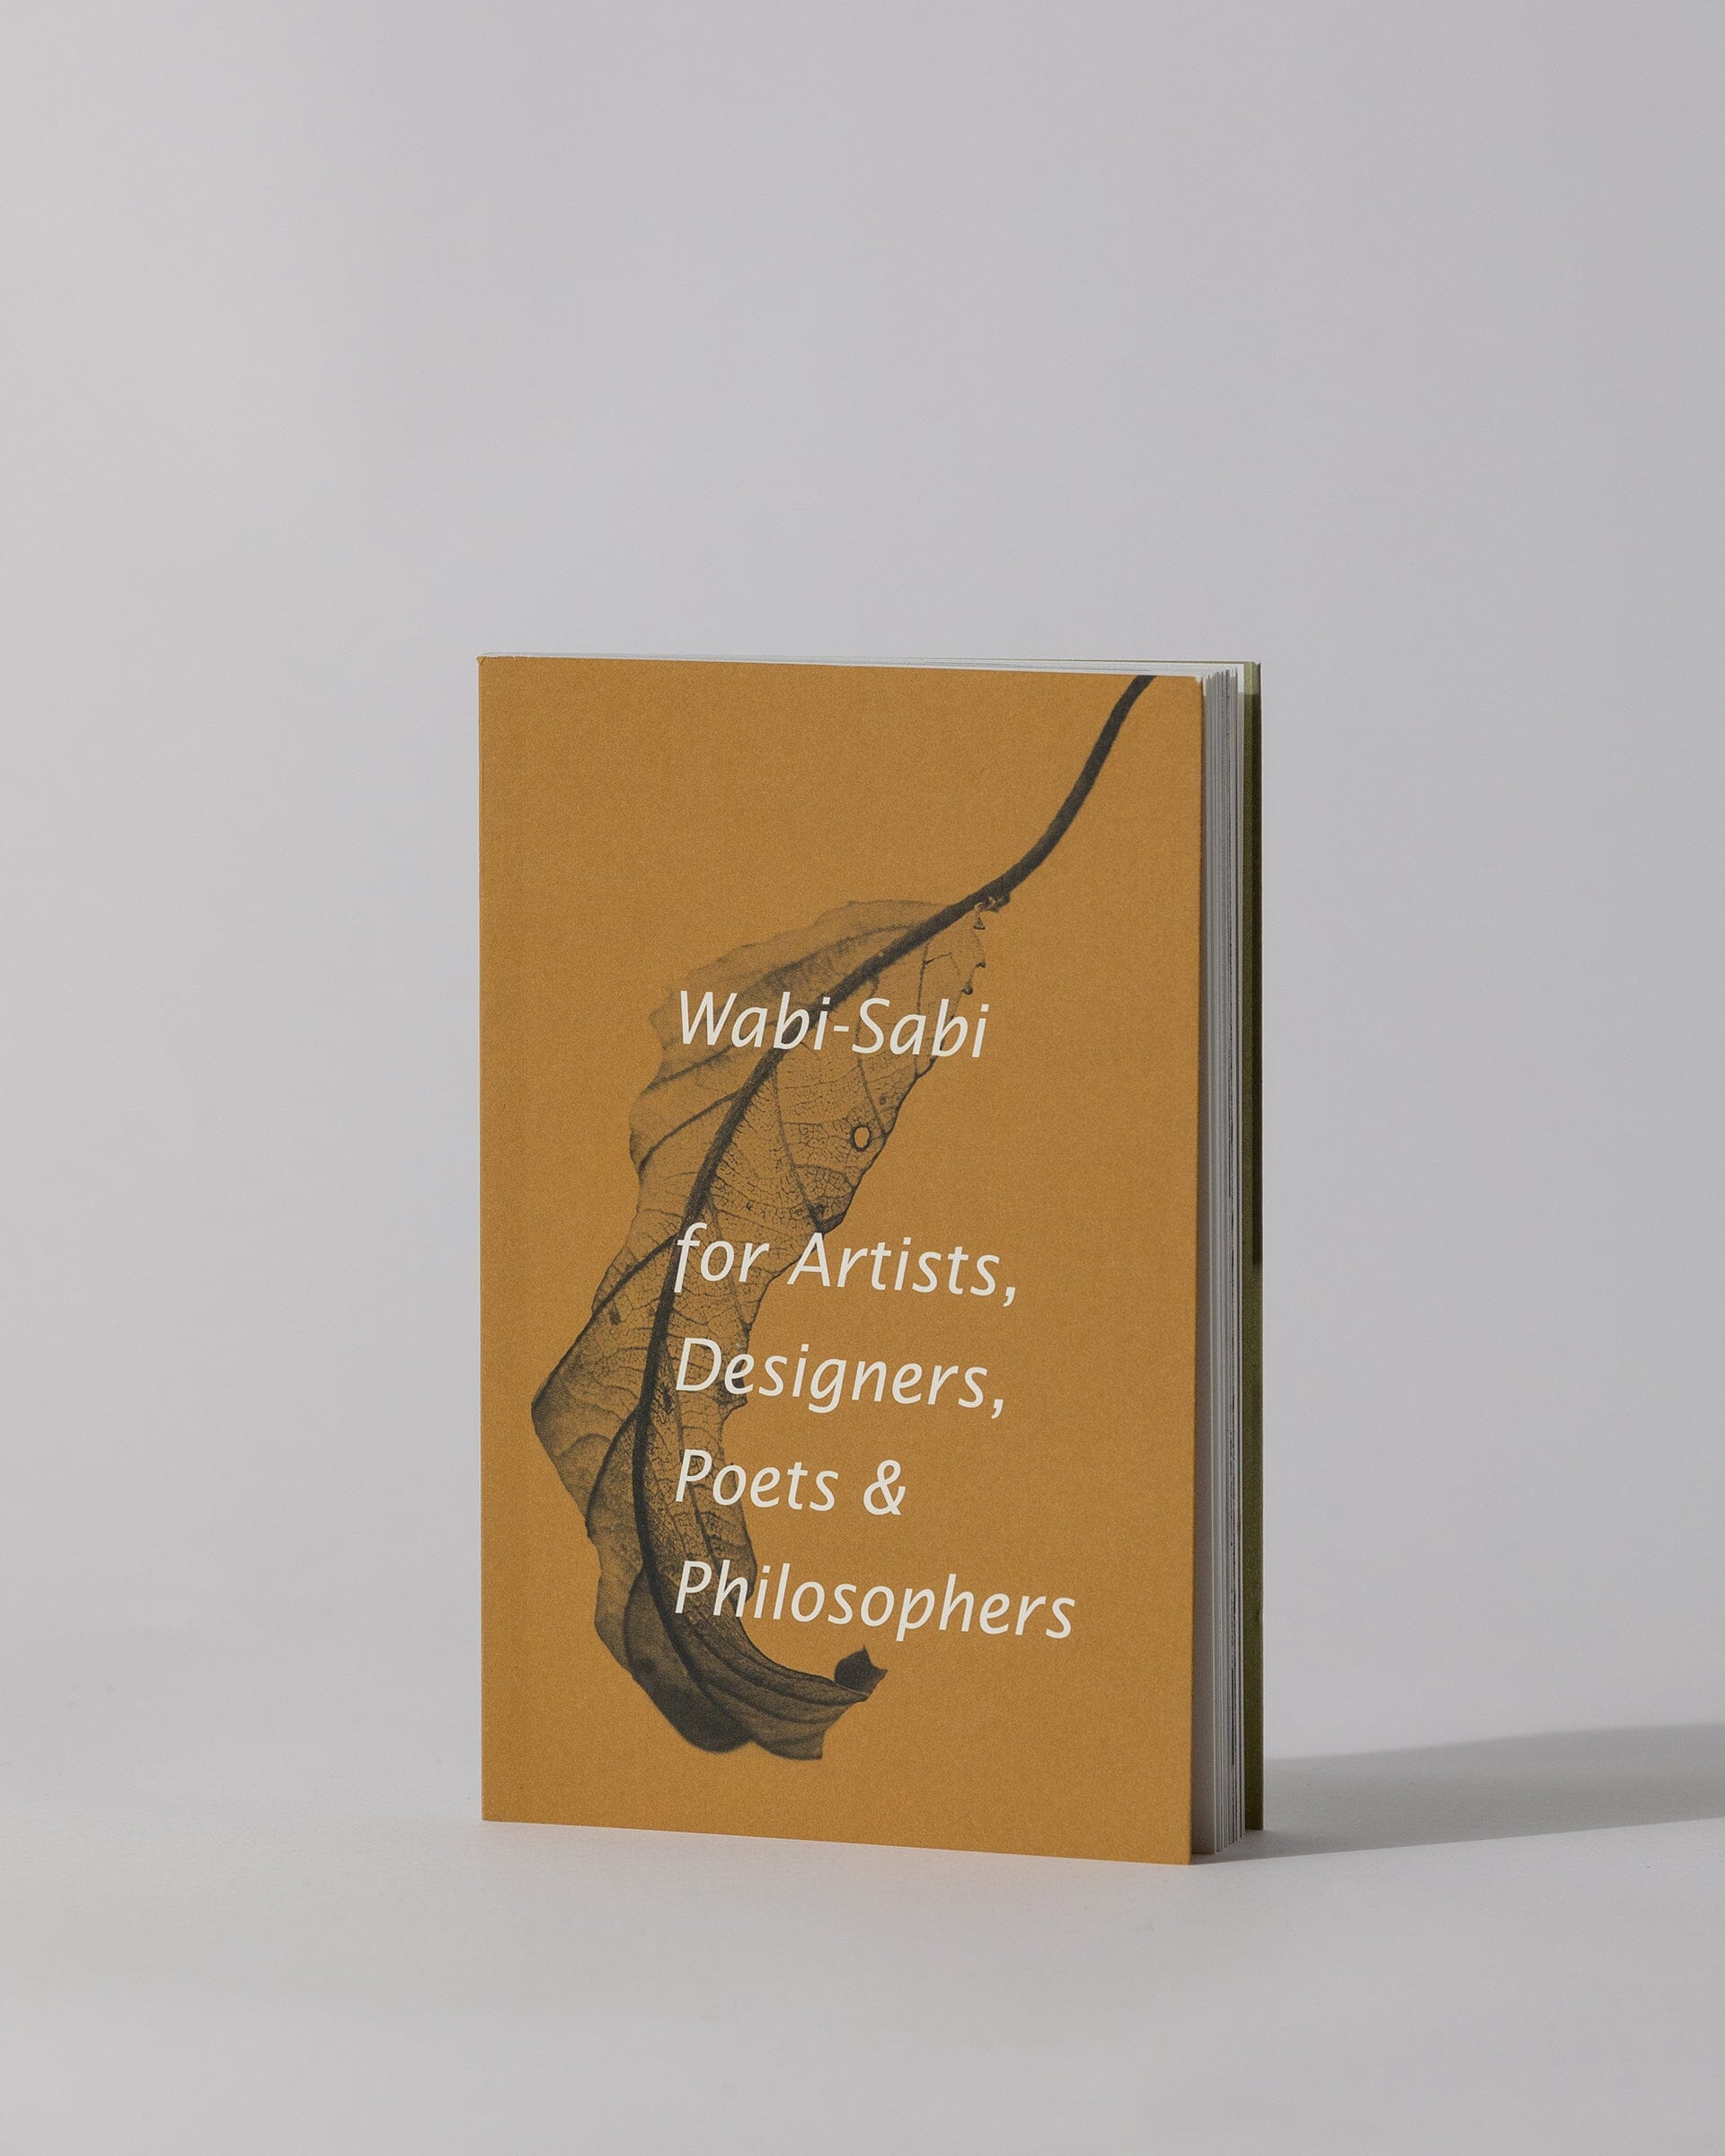 Wabi-Sabi for Artists, Designers, Poets & Philosophers 2